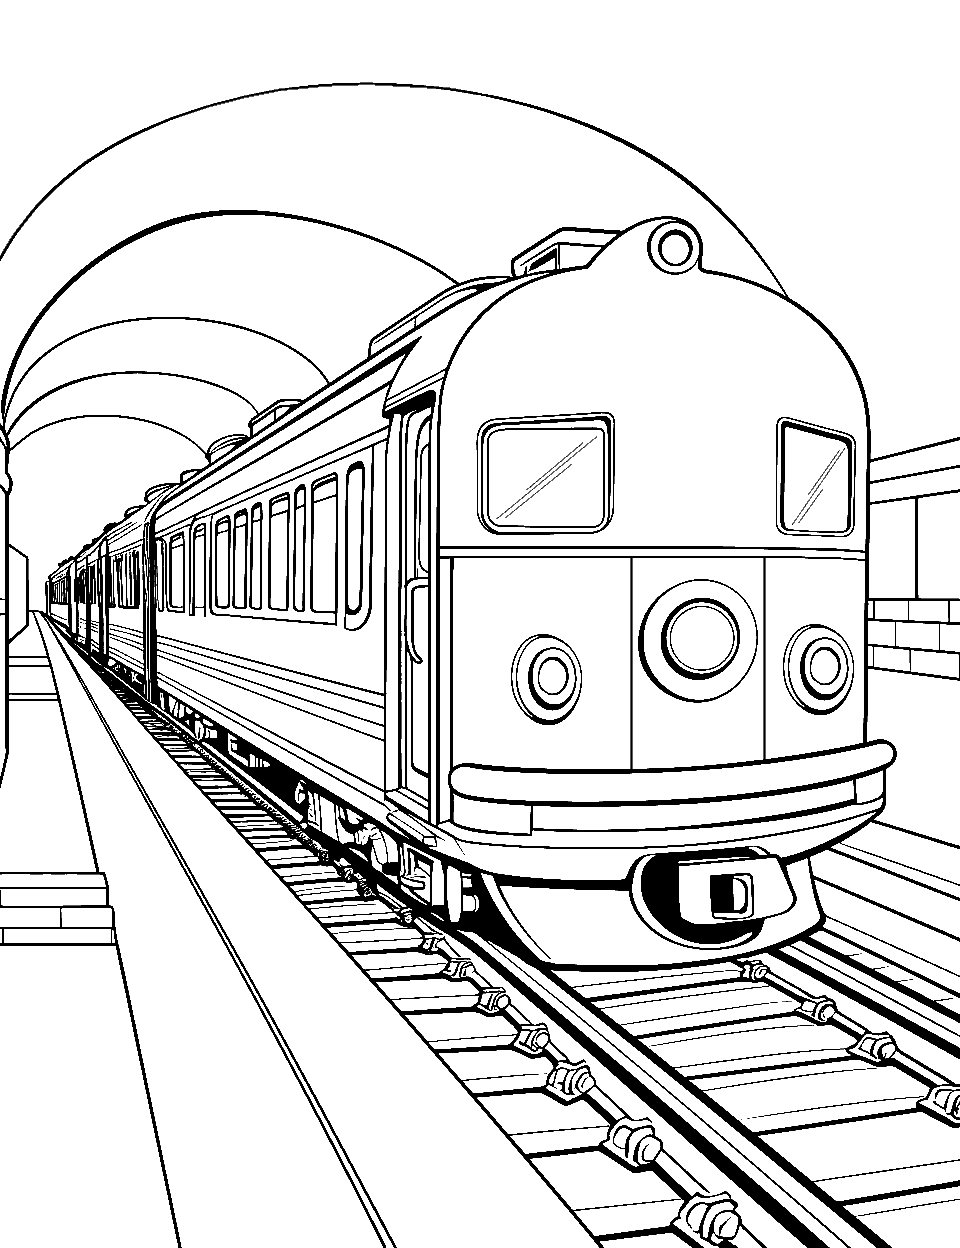 Underground Subway Scene Coloring Page - A sleek subway train in an underground tunnel.